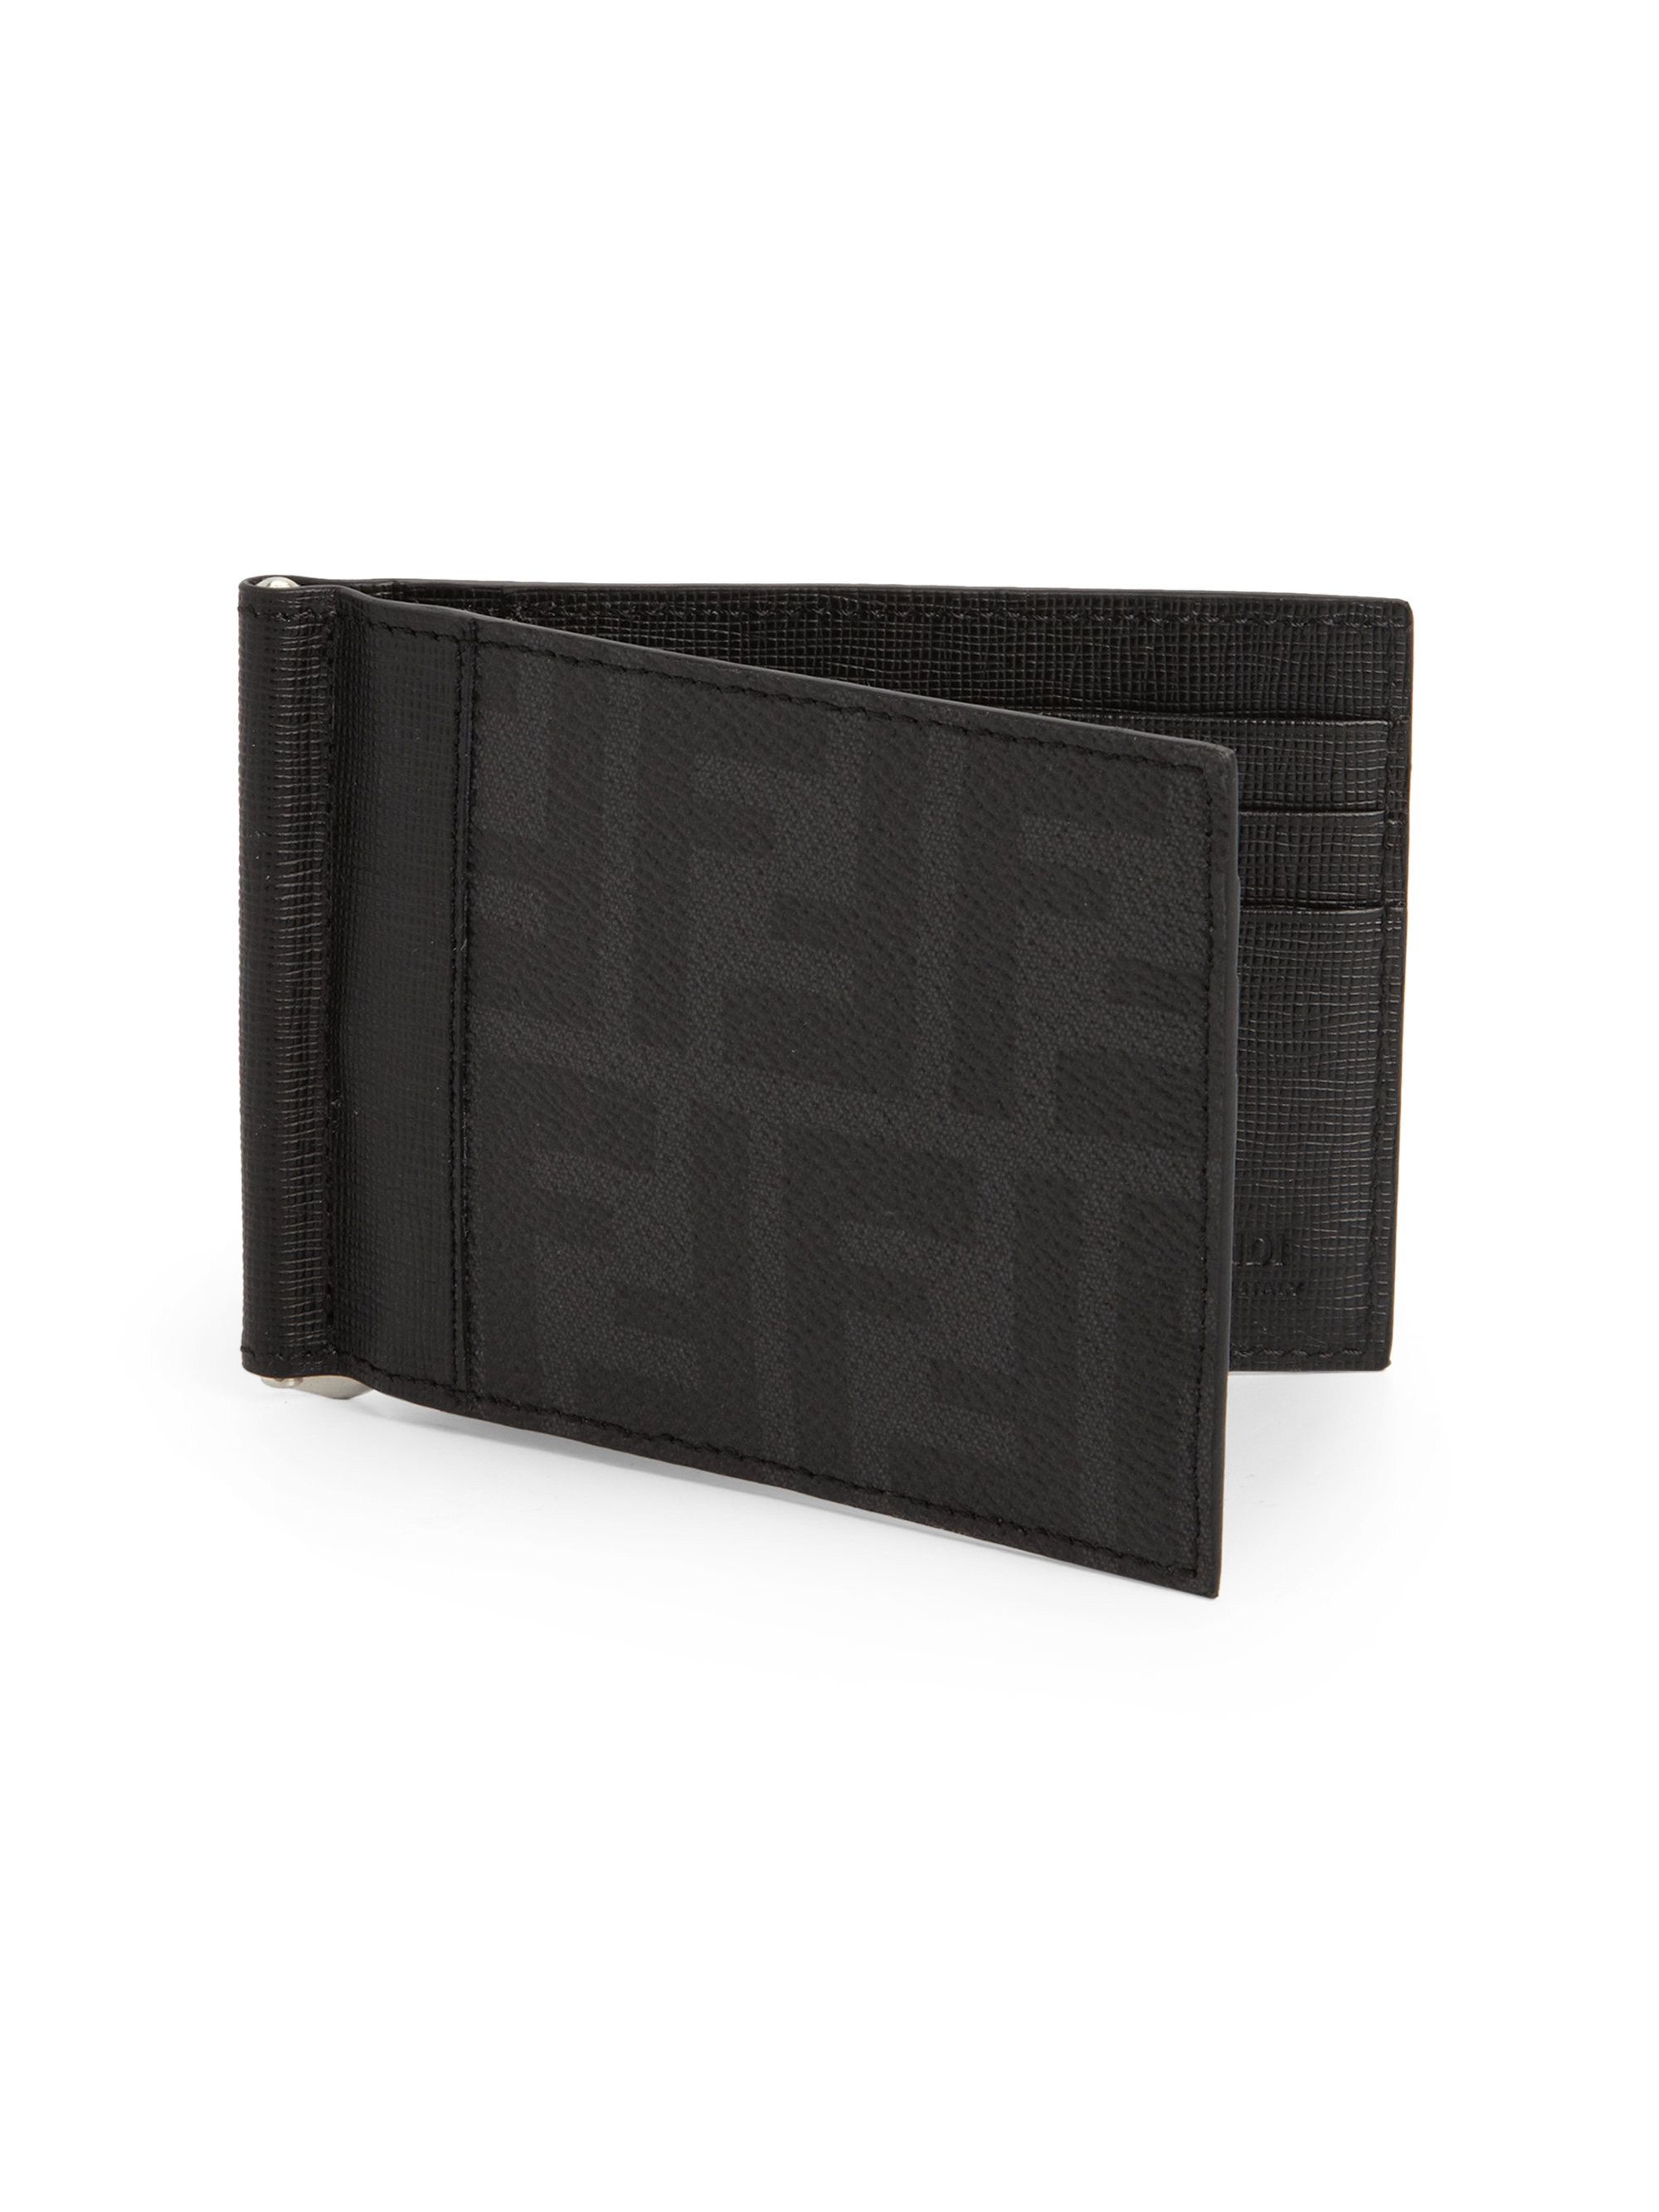 Fendi Money Clip Wallet in Black for Men | Lyst